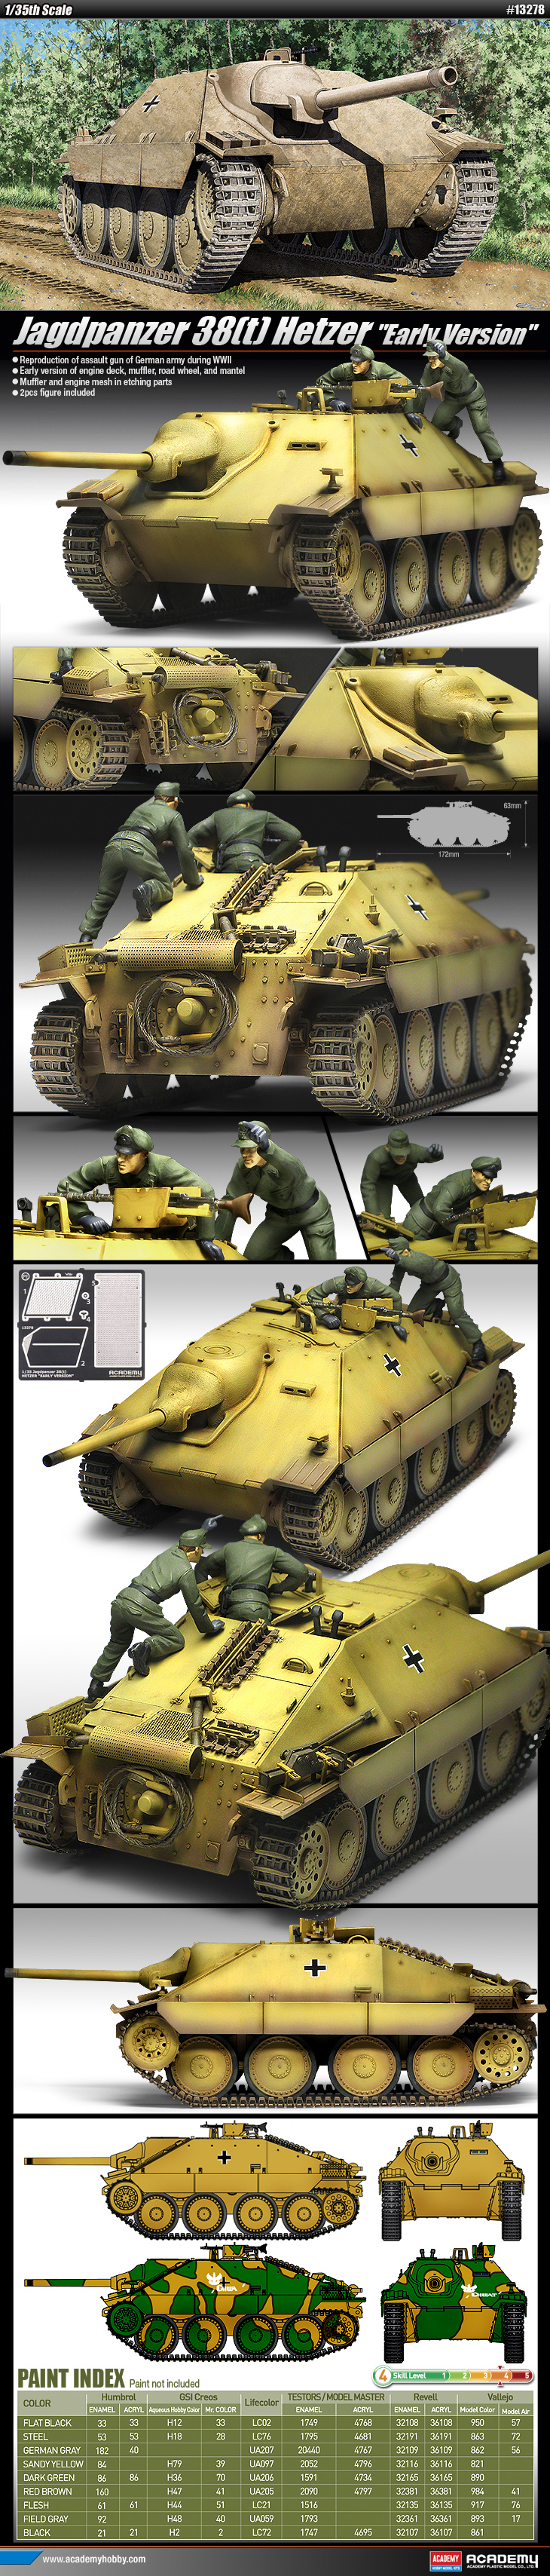 1/35] 13278 Jagdpanzer 38(t) Hetzer "Early Version" - ACADEMY PLASTIC MODEL